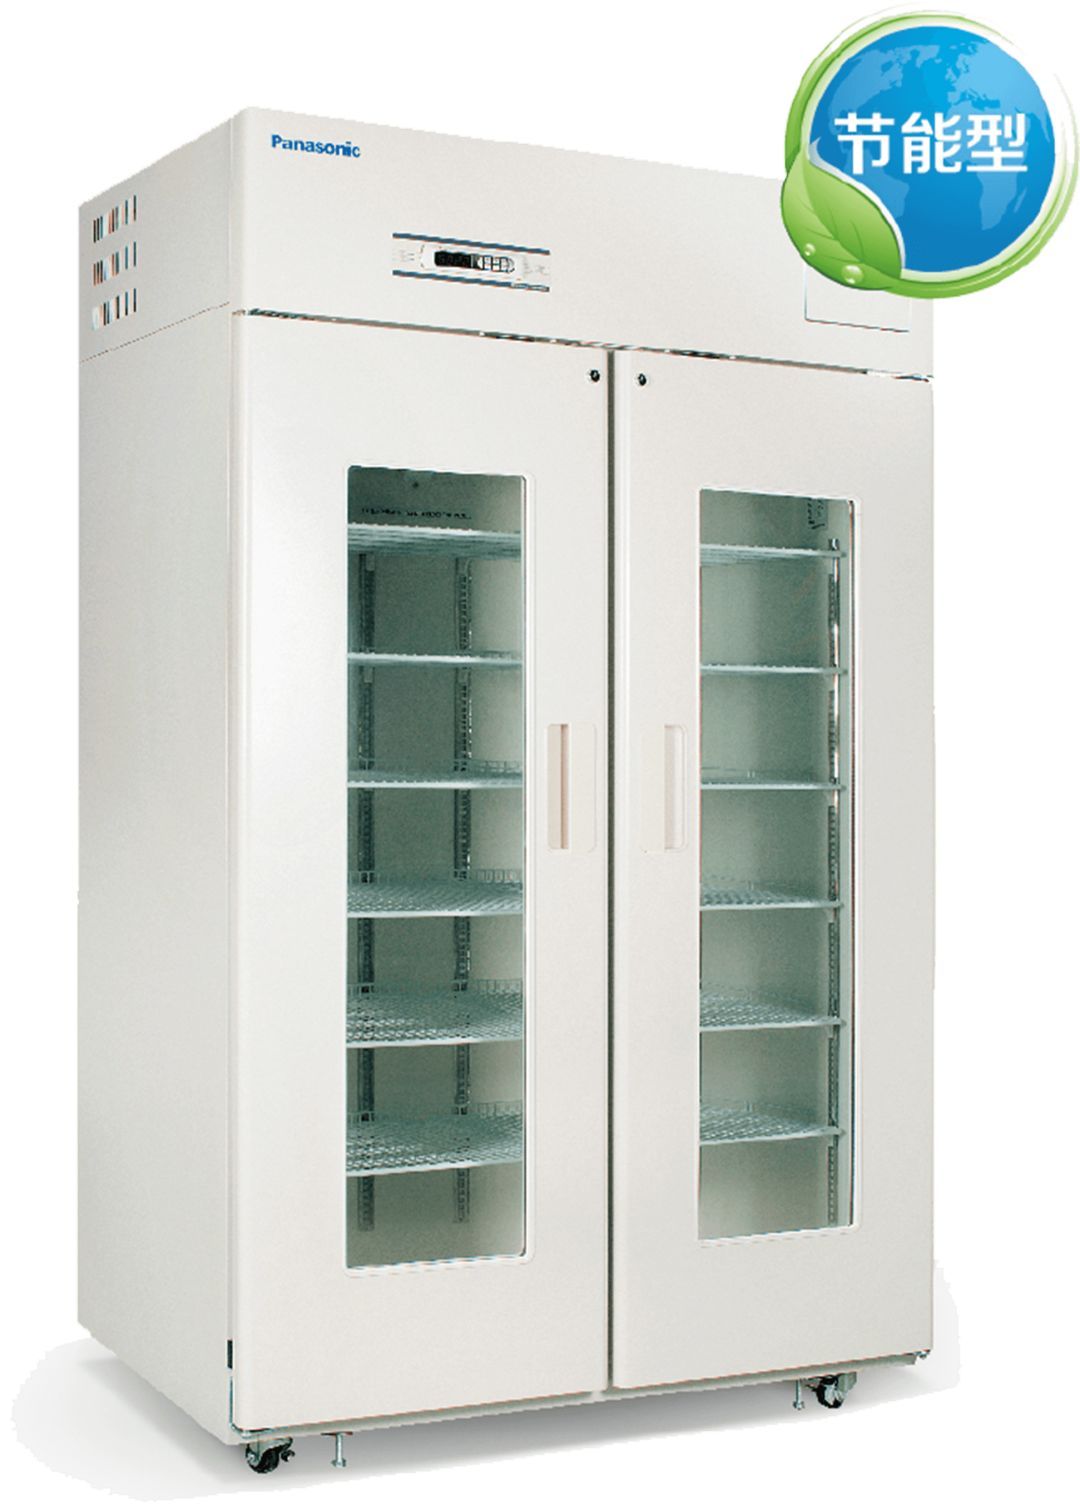 MPR-1010 药剂冷藏箱